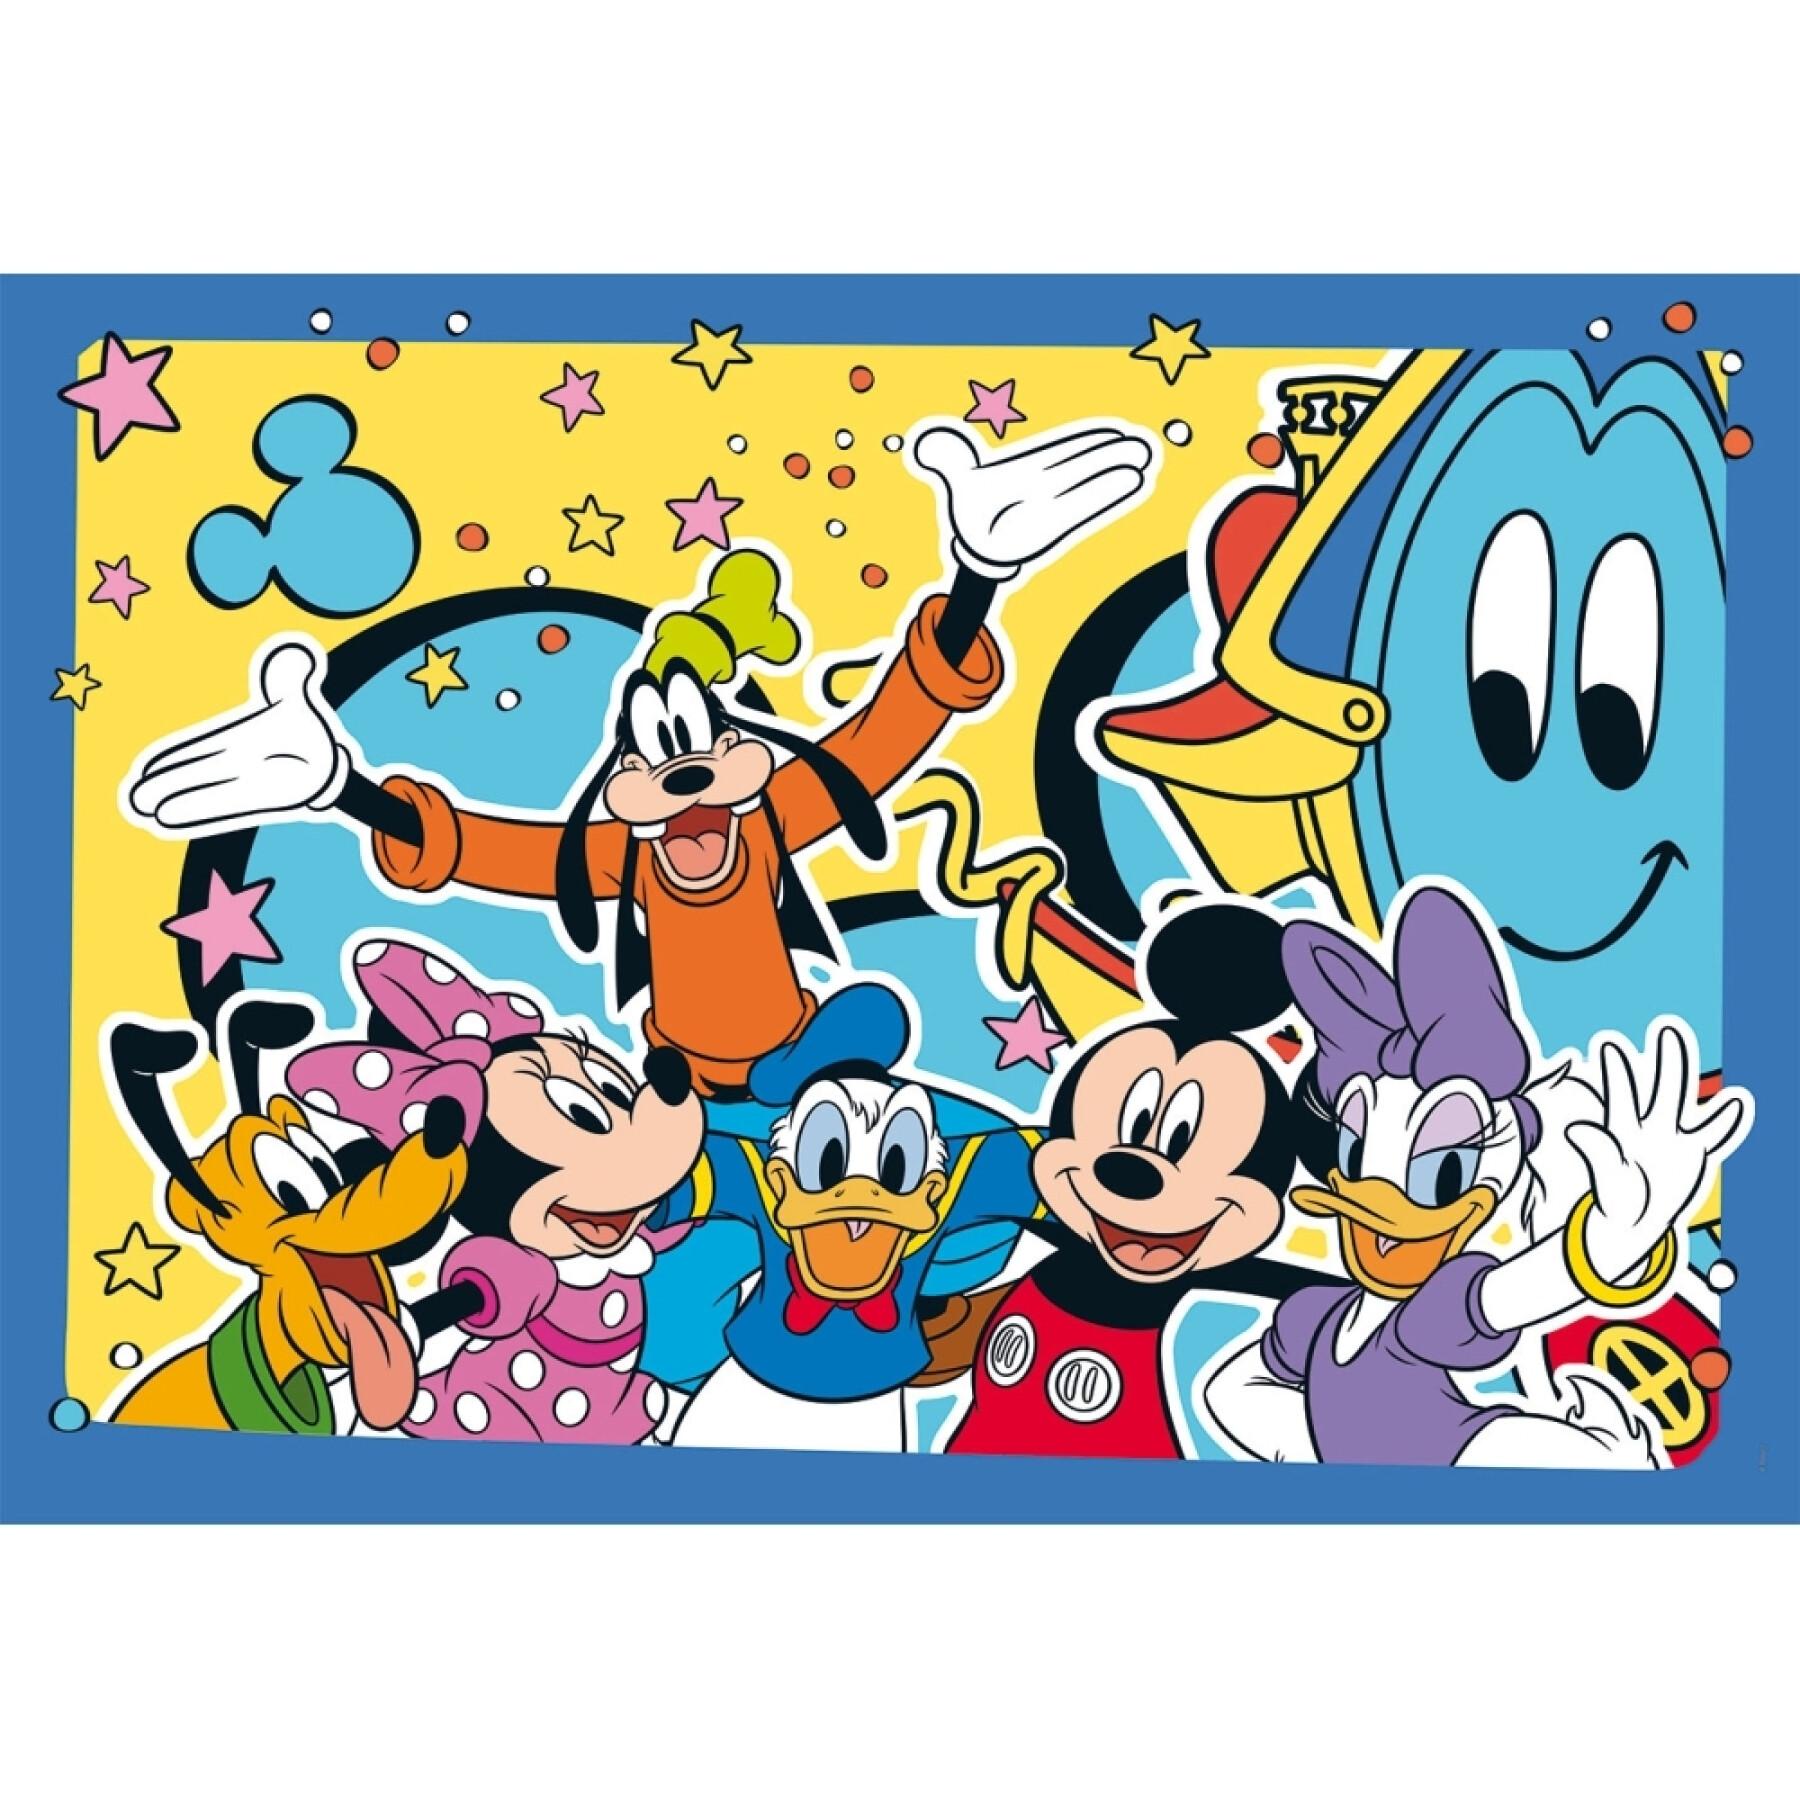 2 x 20-elementowe podwójne puzzle Clementoni Mickey